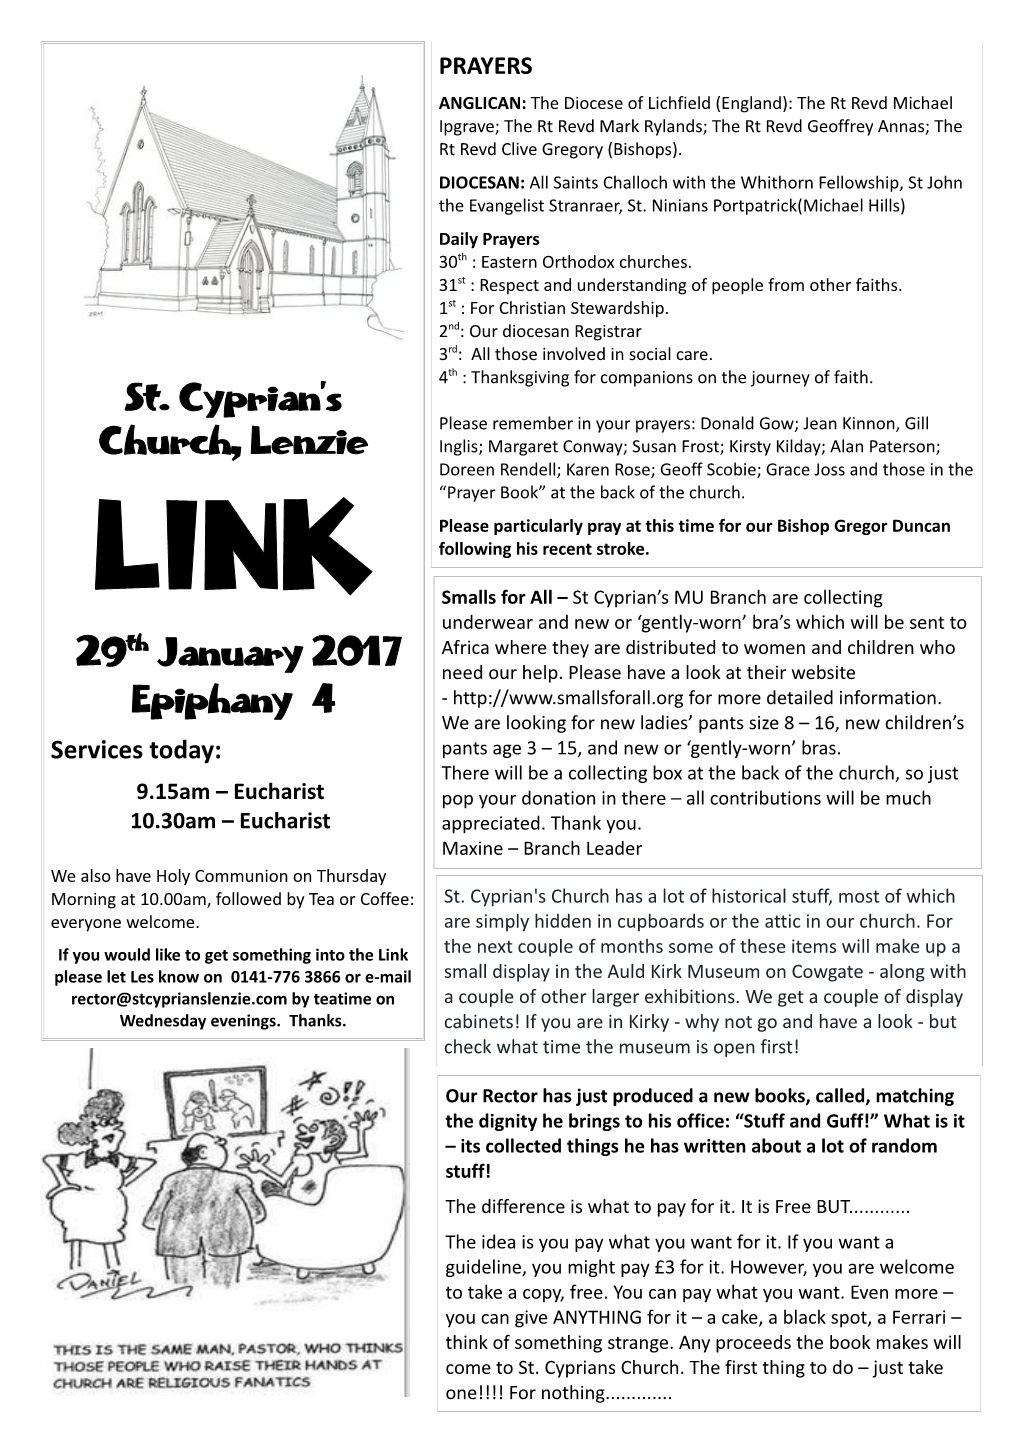 St. Cyprian's Church, Lenzie 29Th January 2017 Epiphany 4